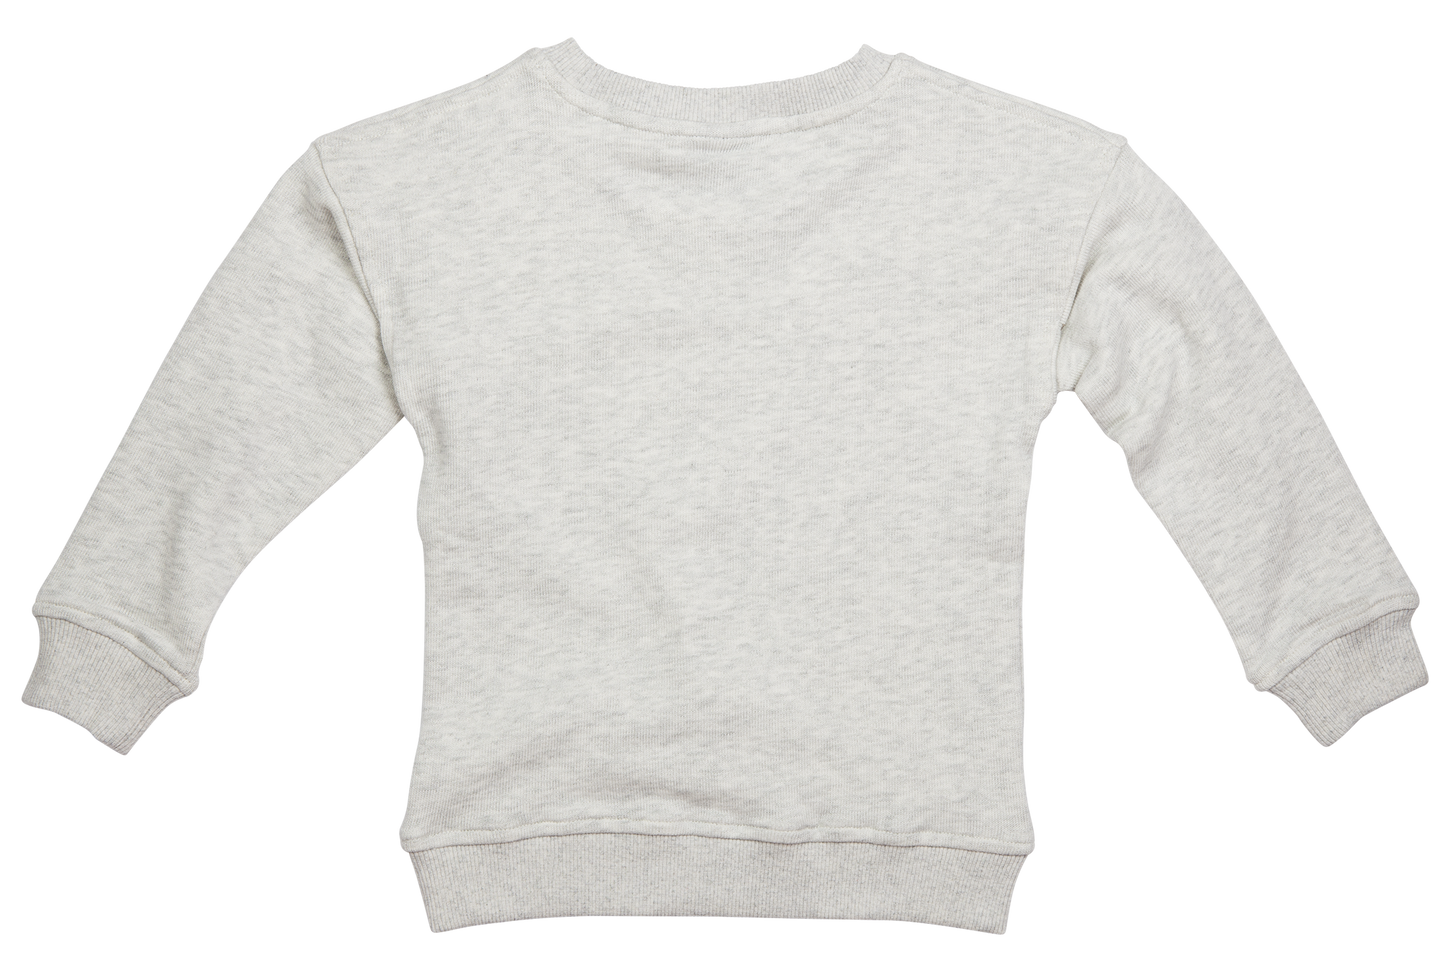 Alta - Grey Crew neck sweater: 6T